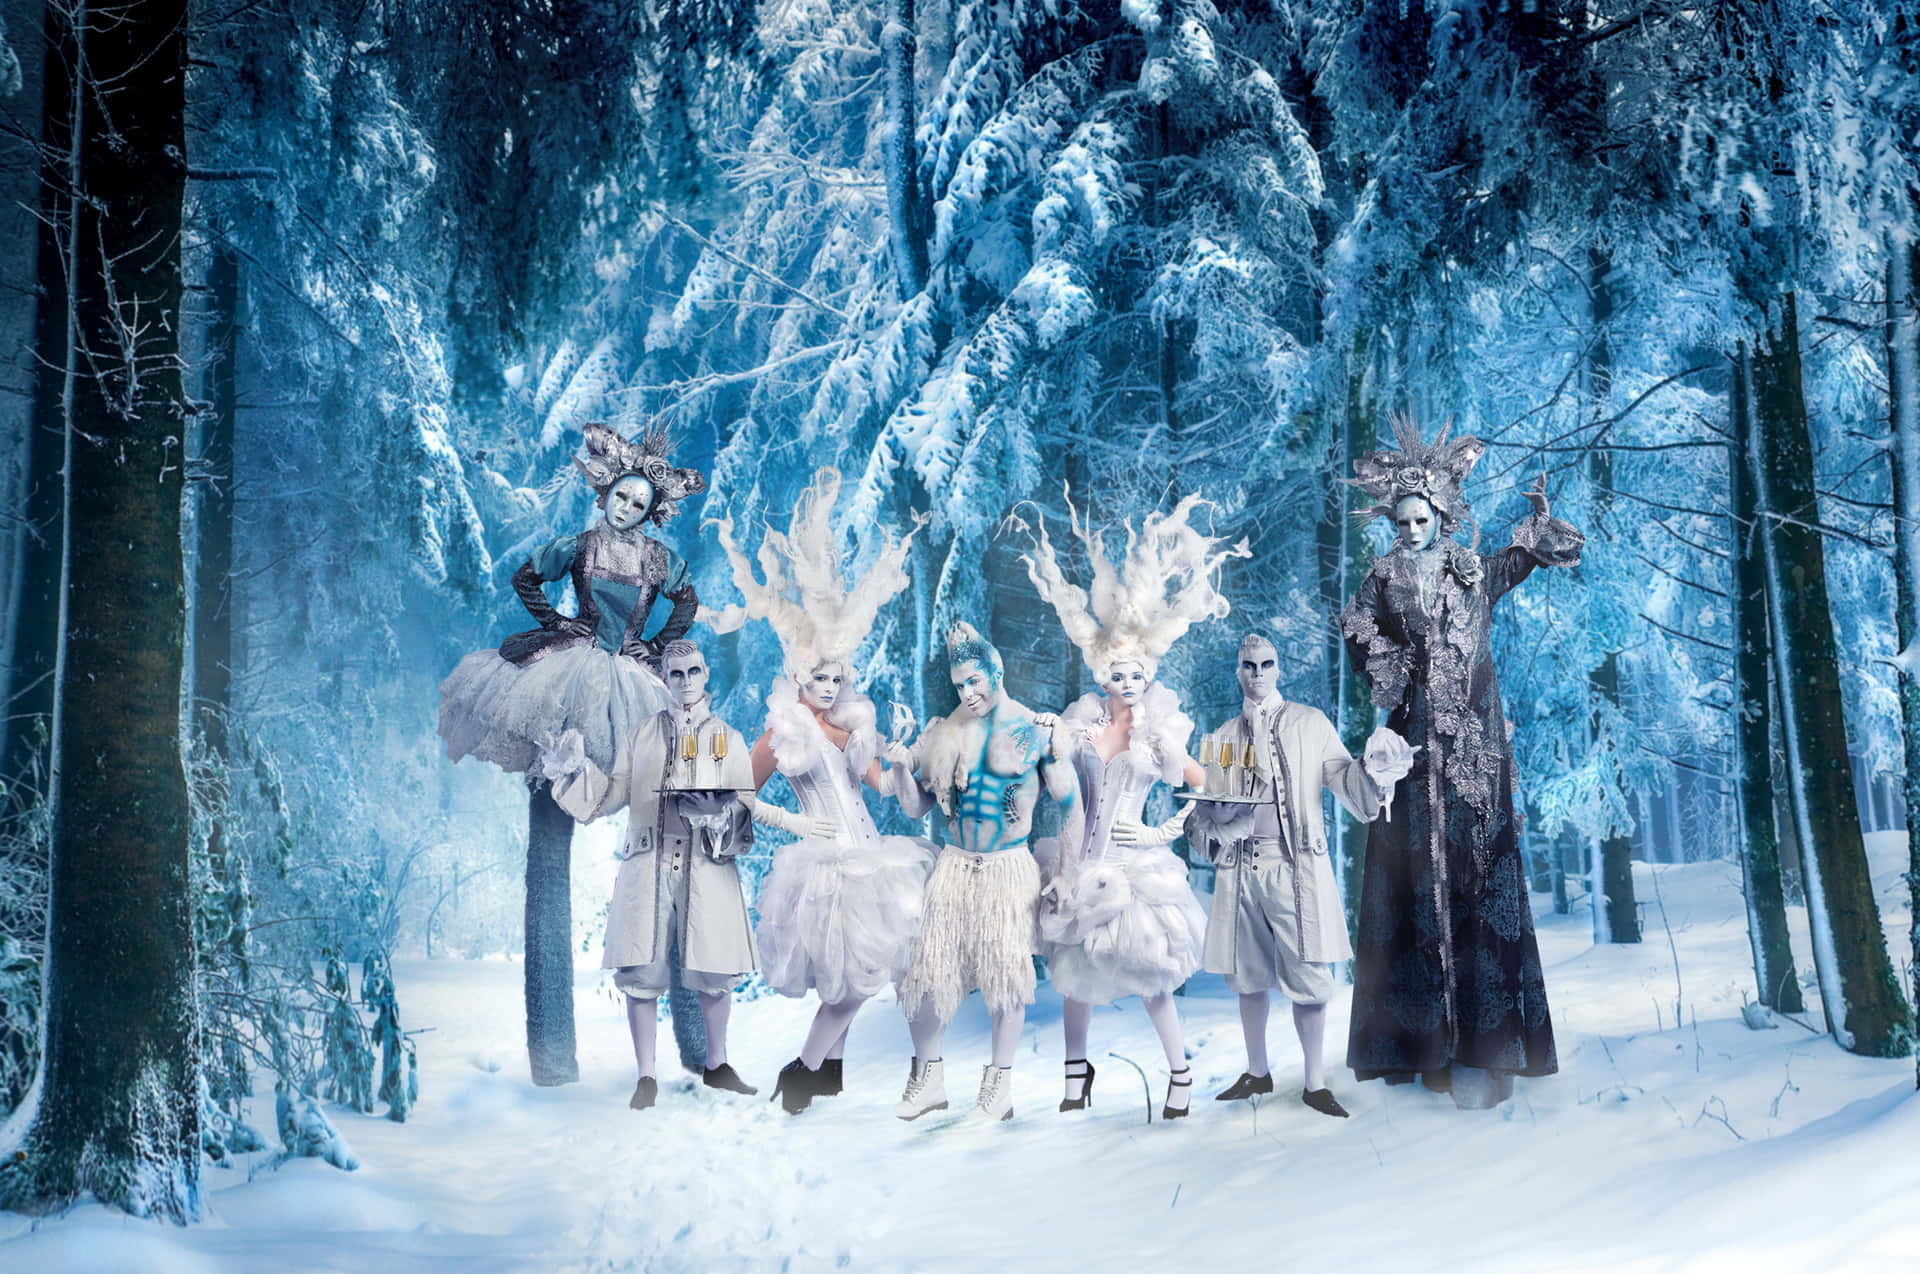 "A Magical World Awaits at the Christmas Winter Wonderland" Wallpaper